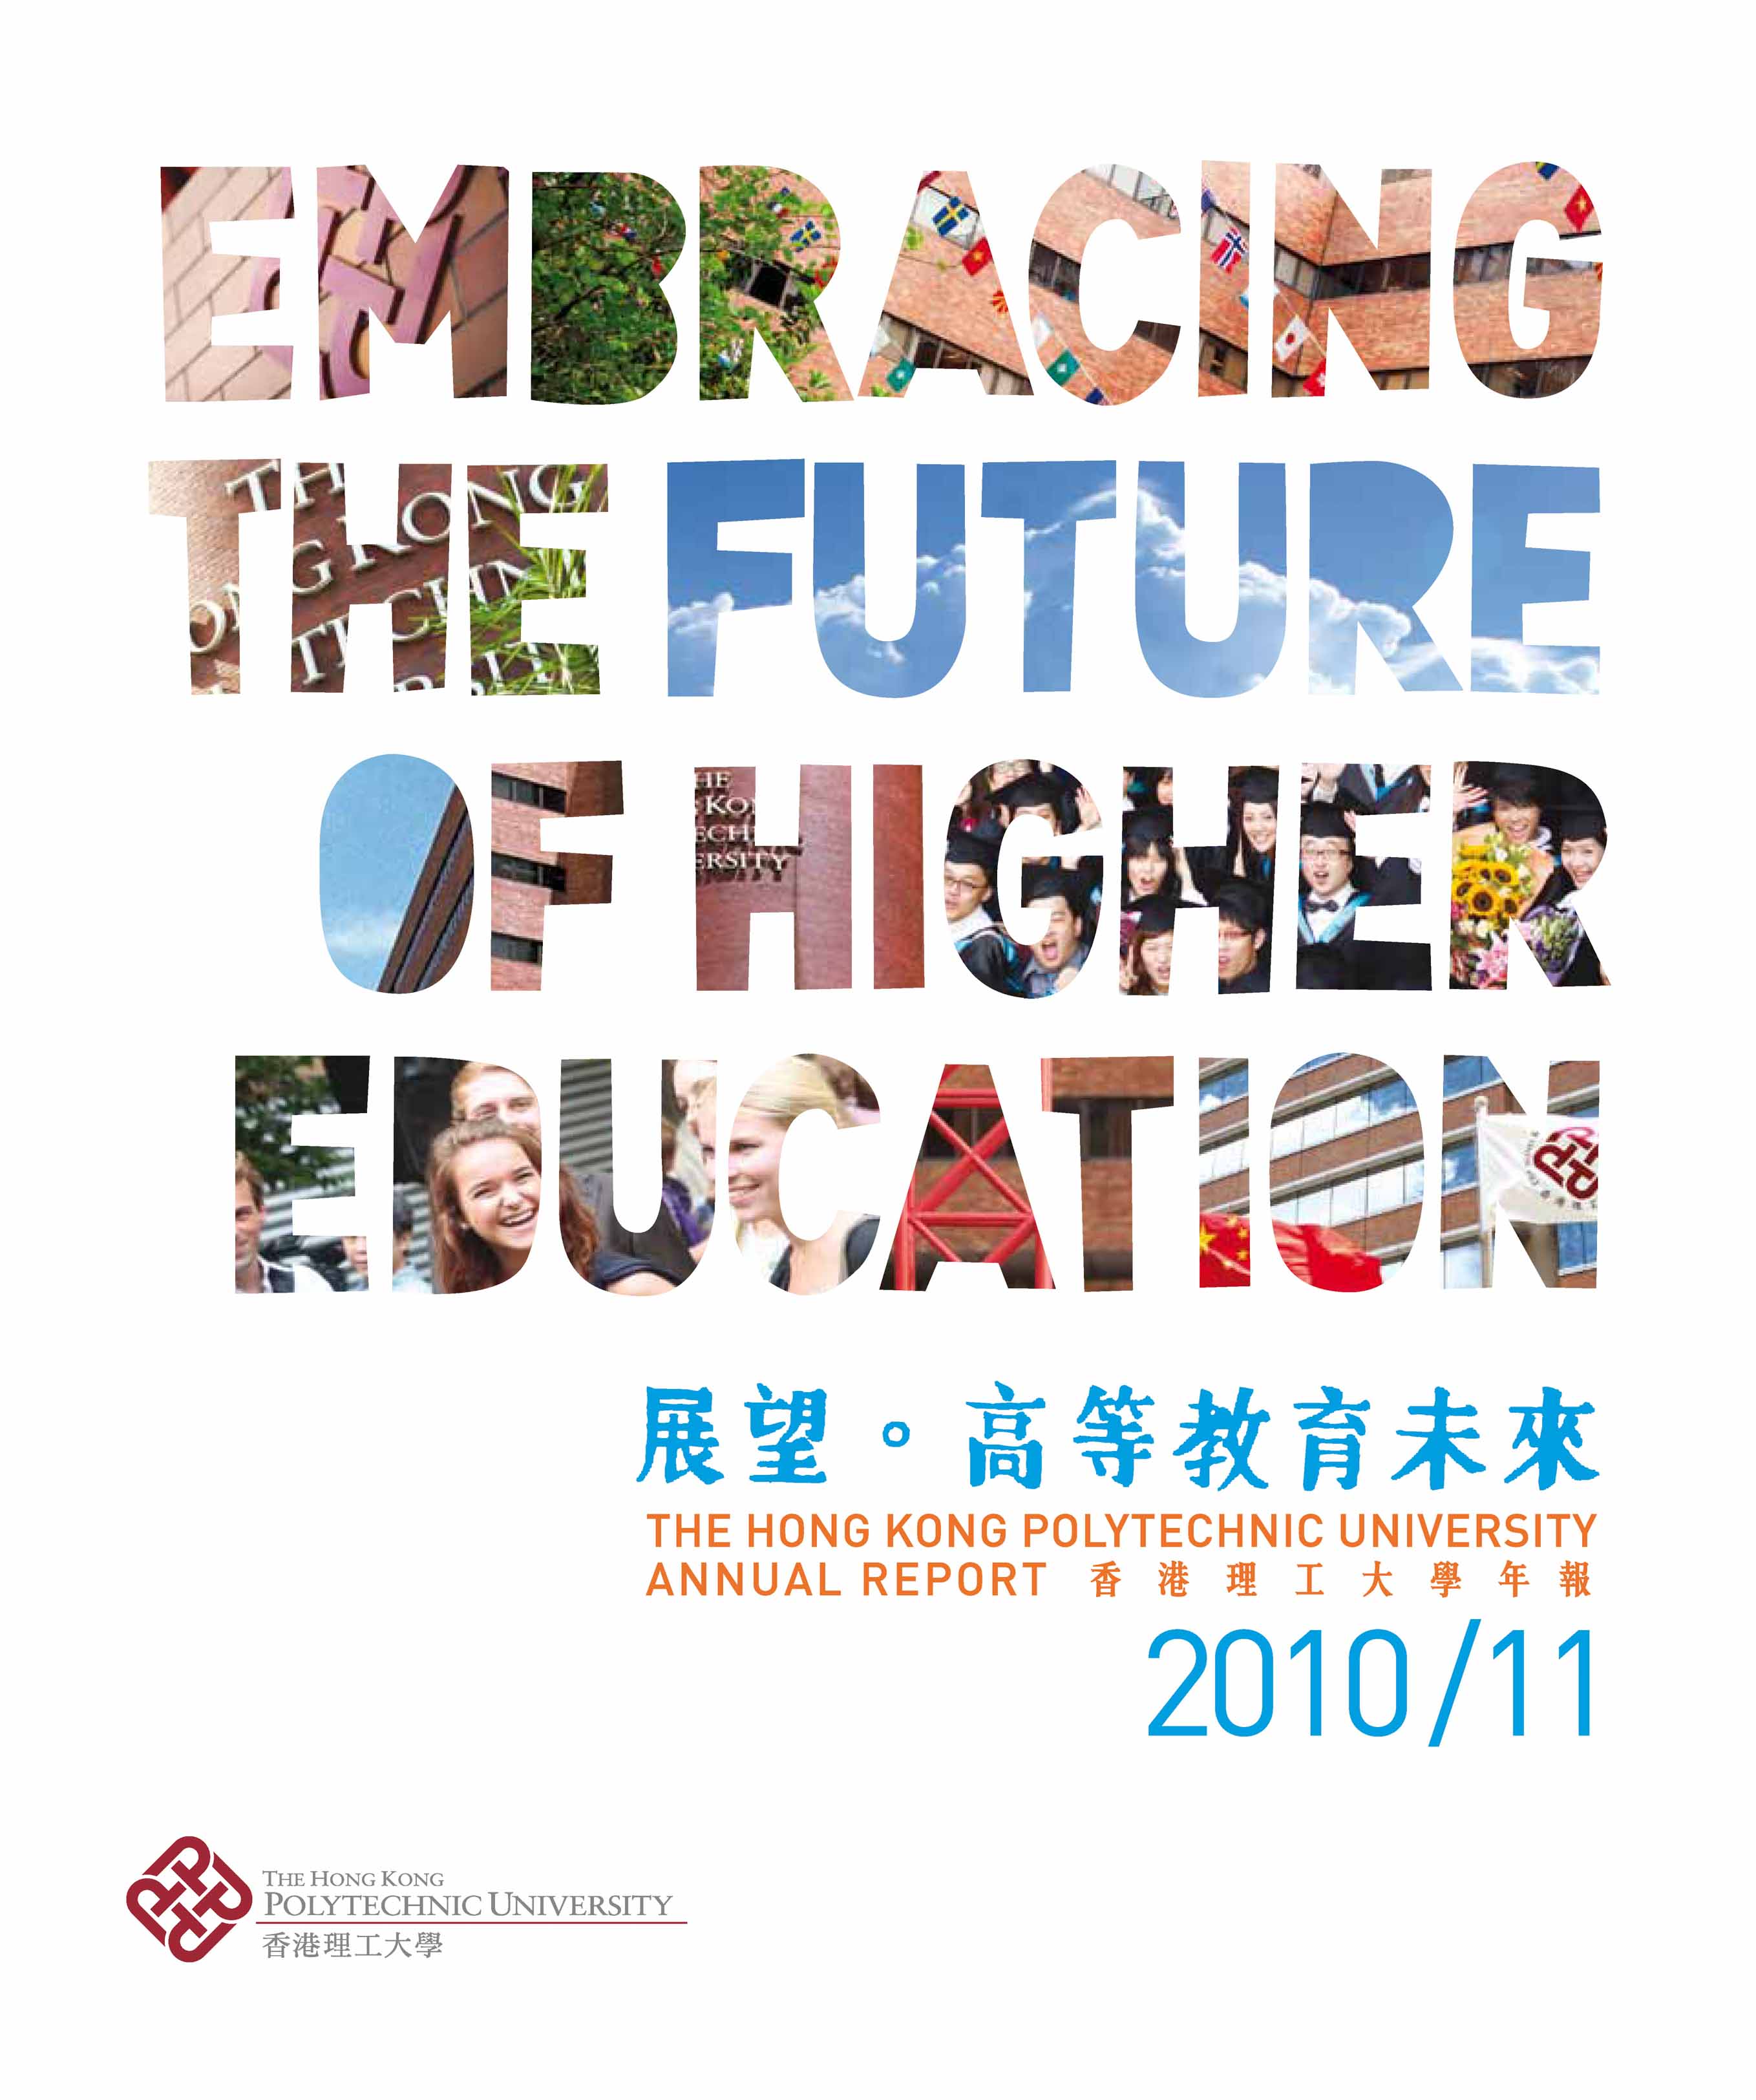 The Hong Kong Polytechnic University Annual Report 2010/11